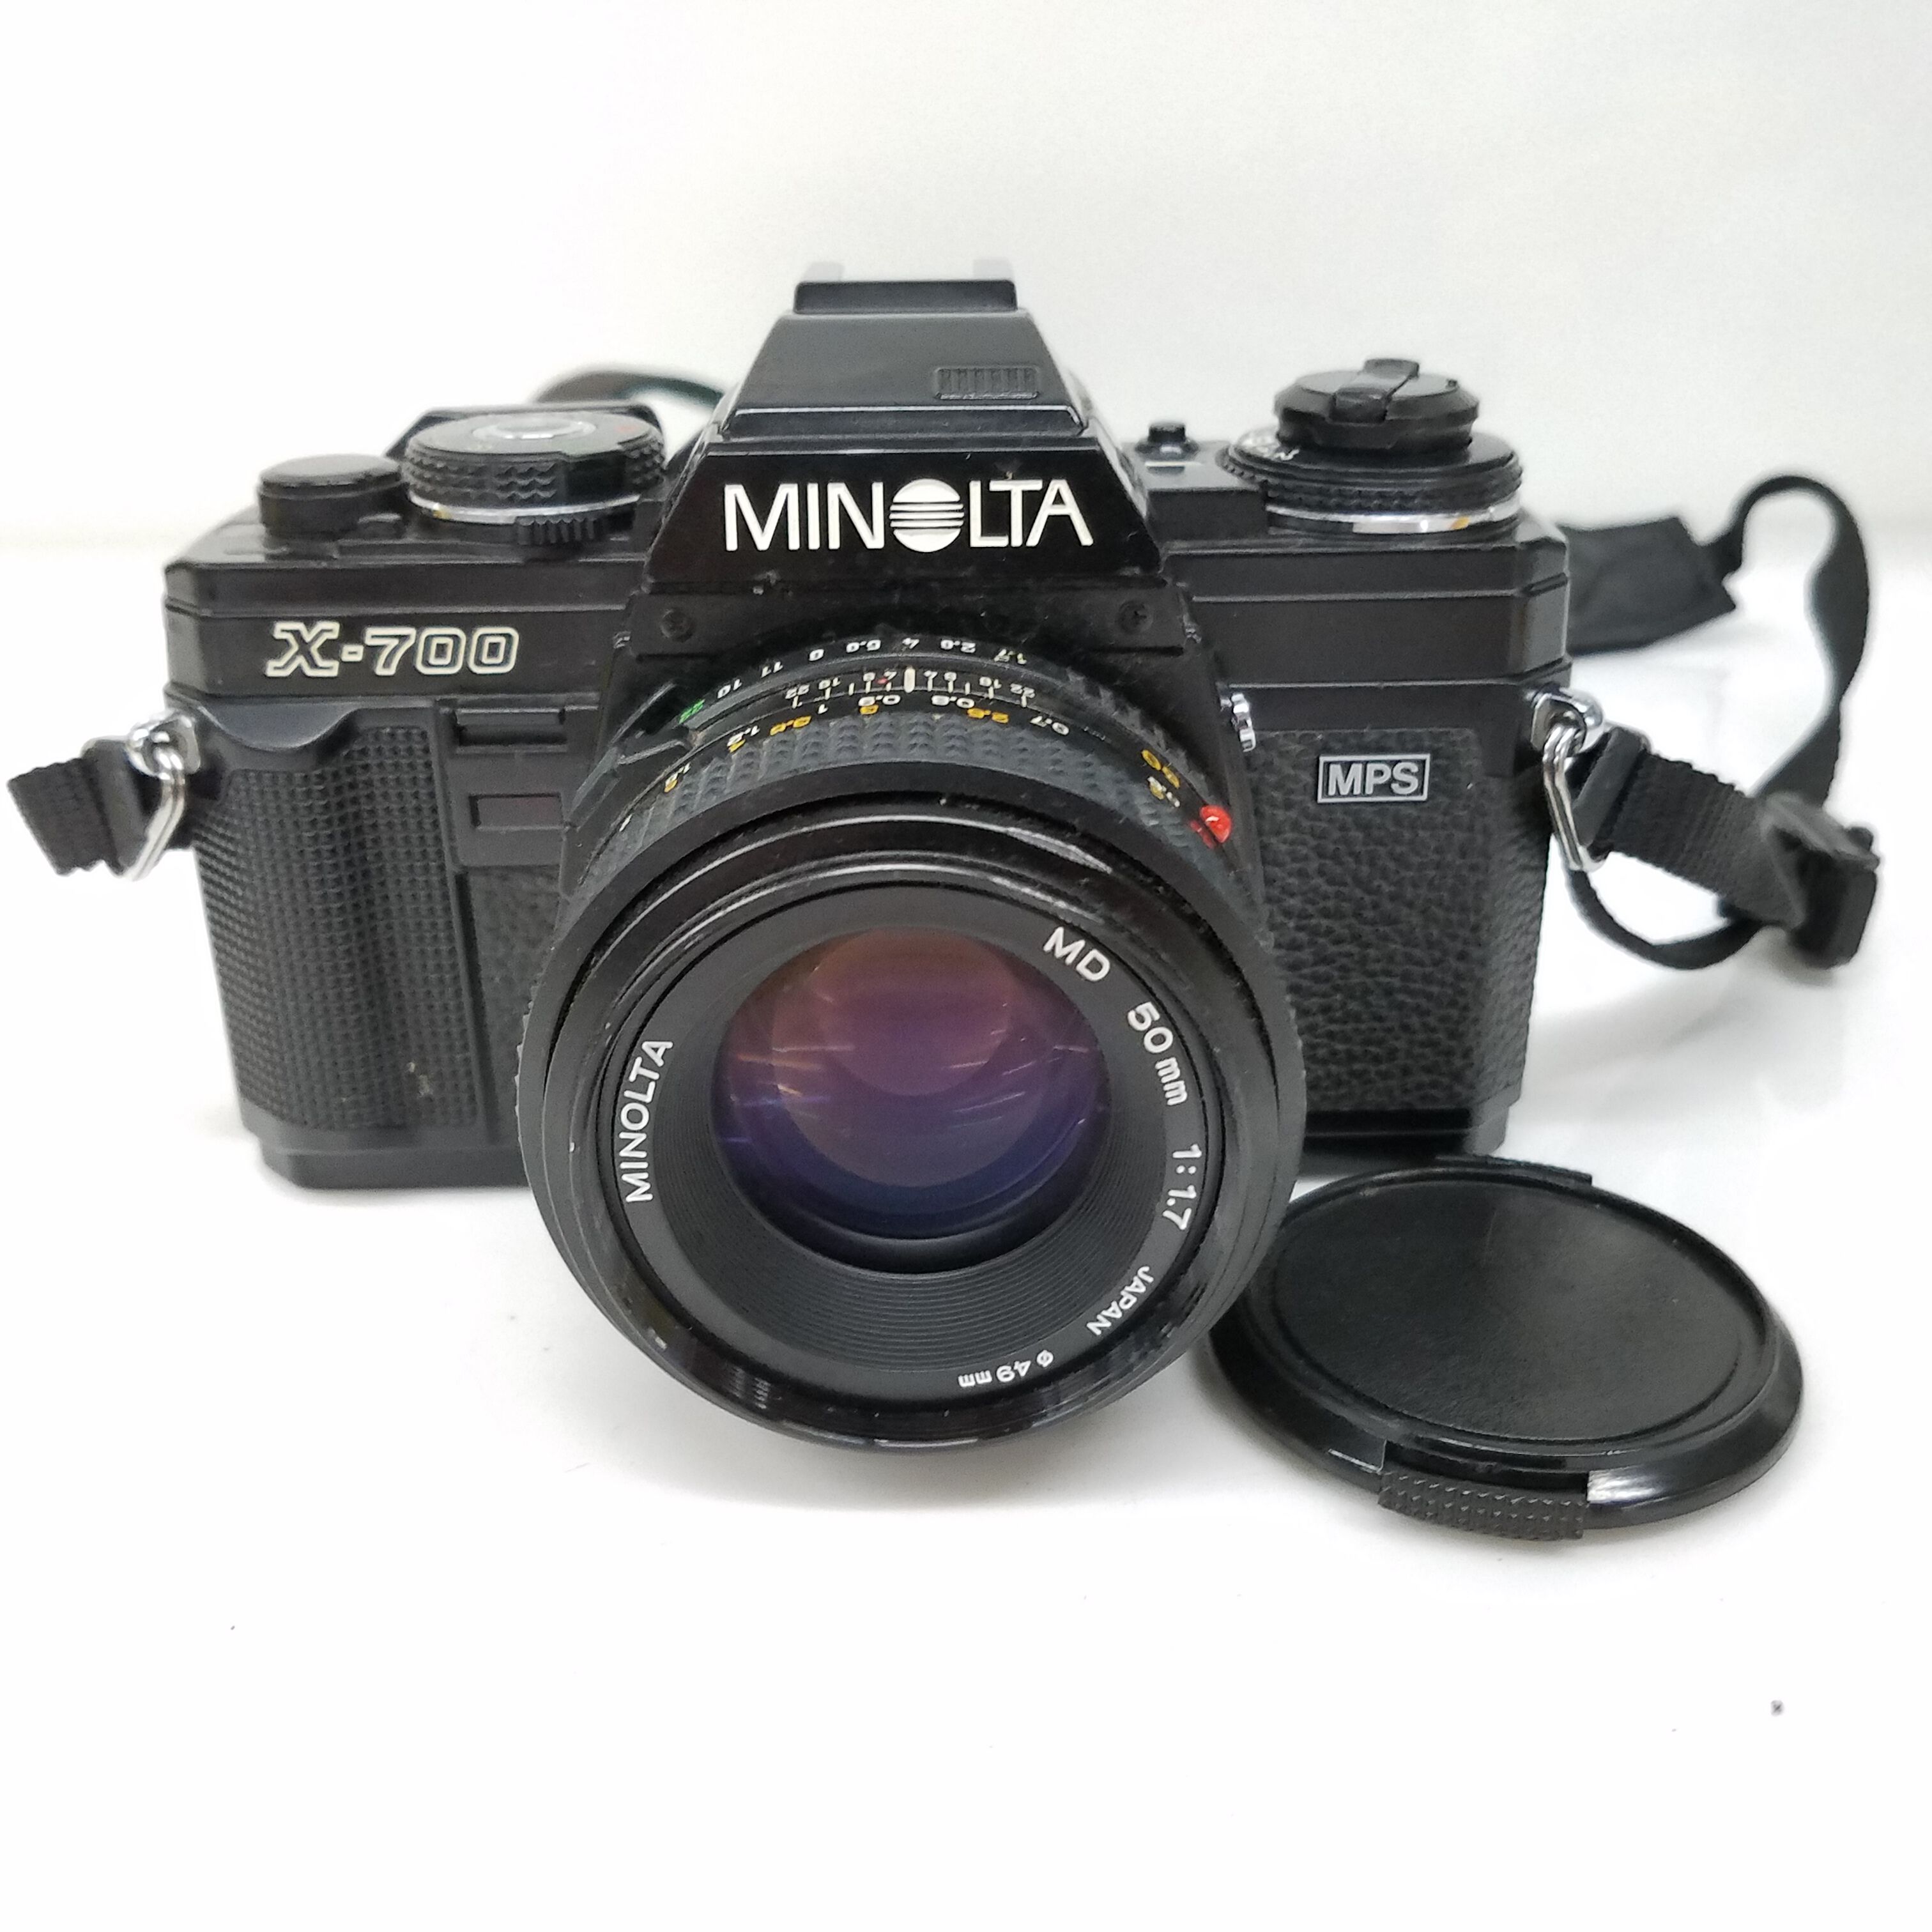 Buy the Minolta X-700 35mm SLR Camera with 50mm f/1.7 Lens